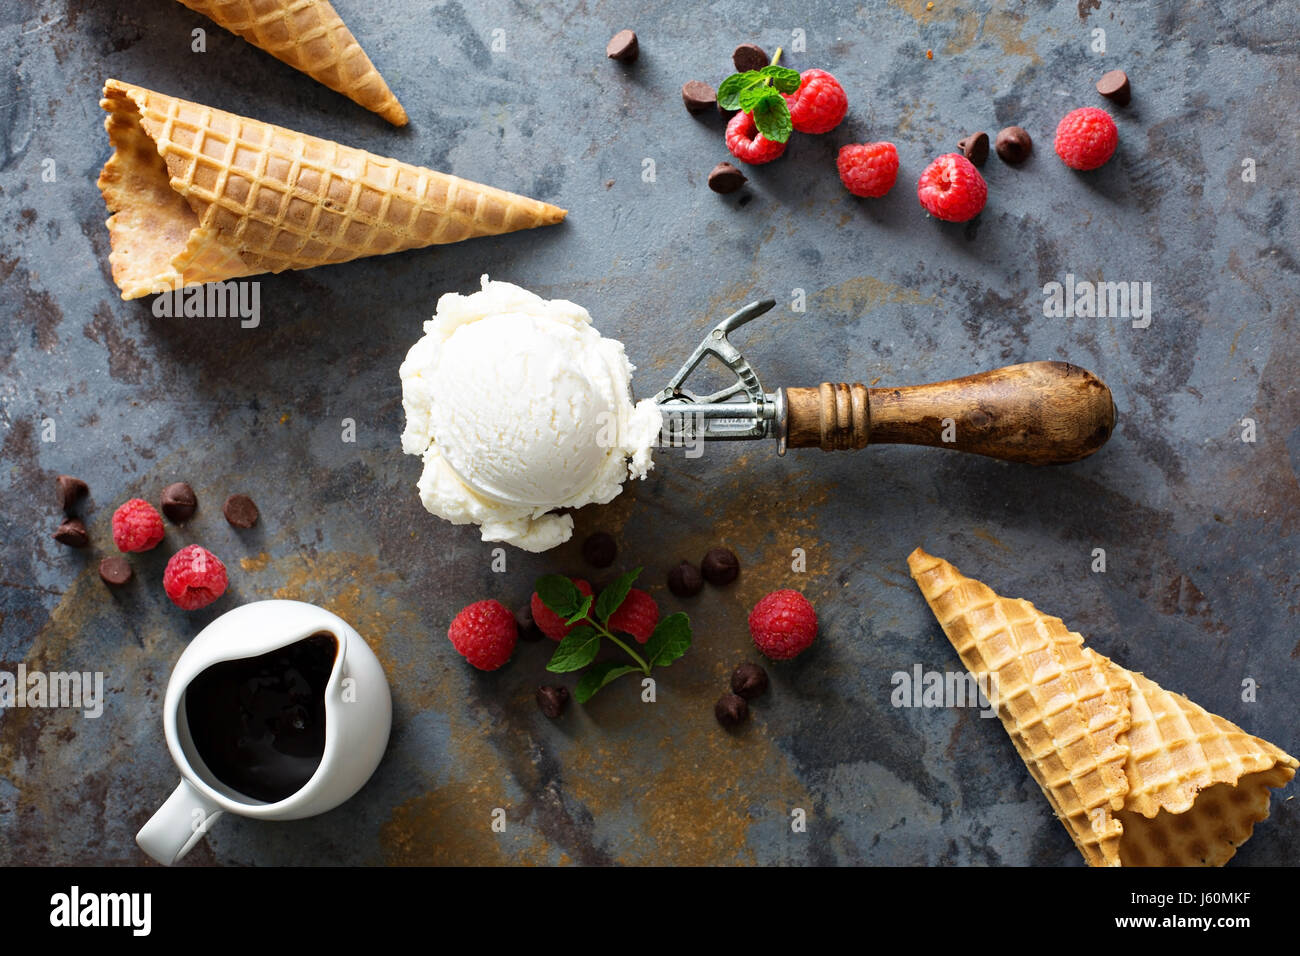 https://c8.alamy.com/comp/J60MKF/vanilla-ice-cream-scoop-in-a-spoon-J60MKF.jpg